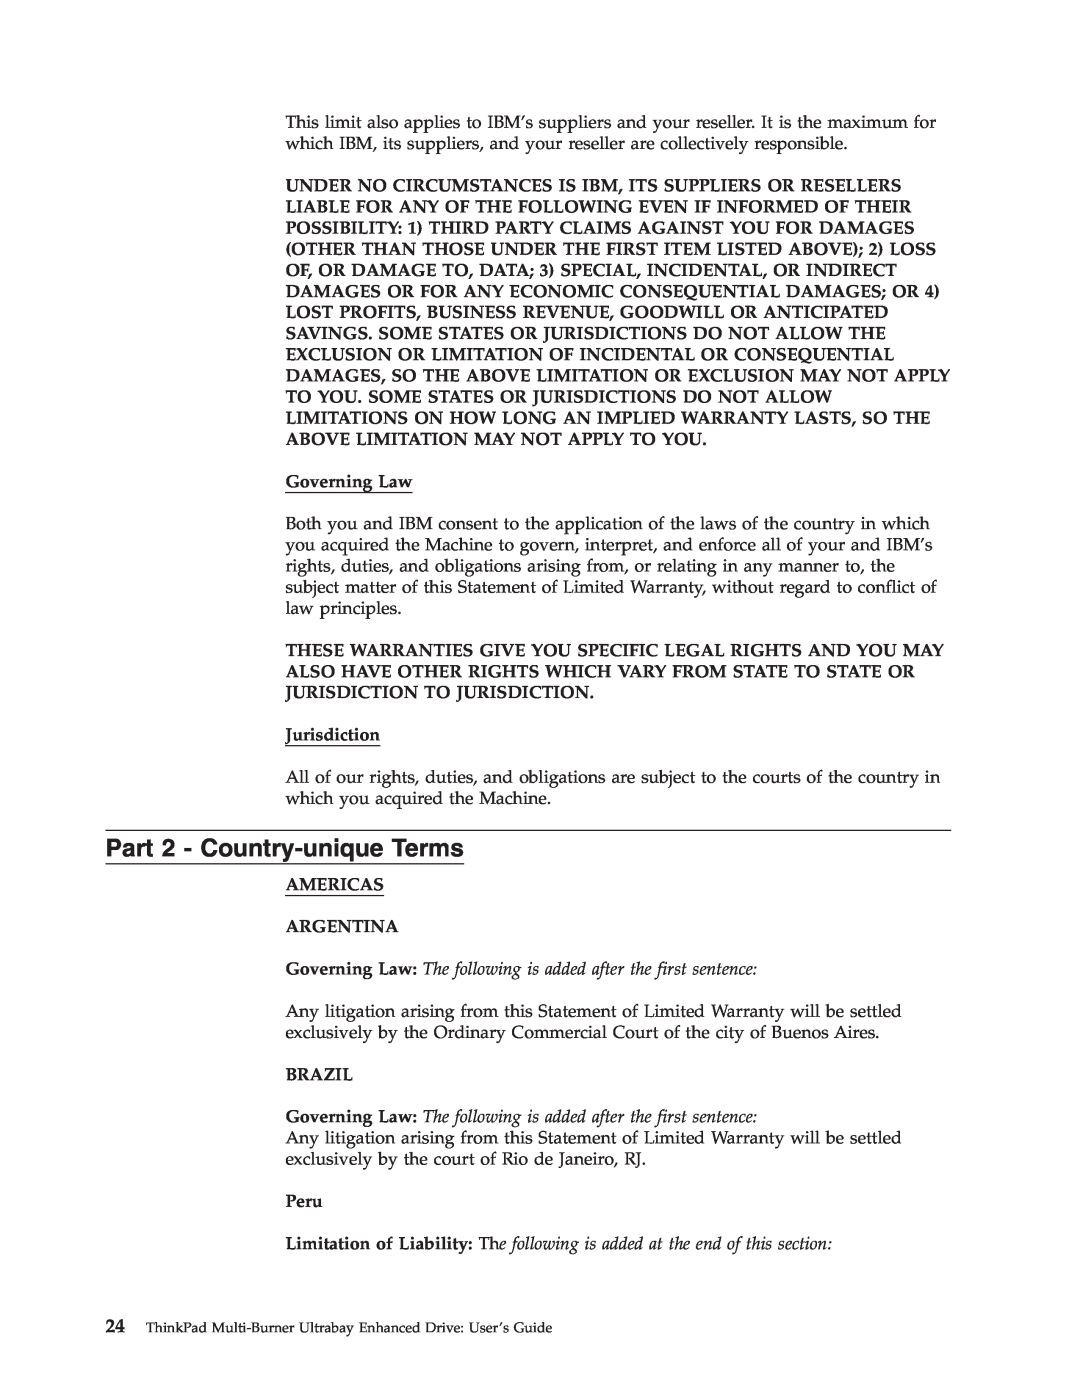 IBM 73P3279 manual Part 2 - Country-unique Terms, Governing Law, Jurisdiction, Americas Argentina, Brazil, Peru 